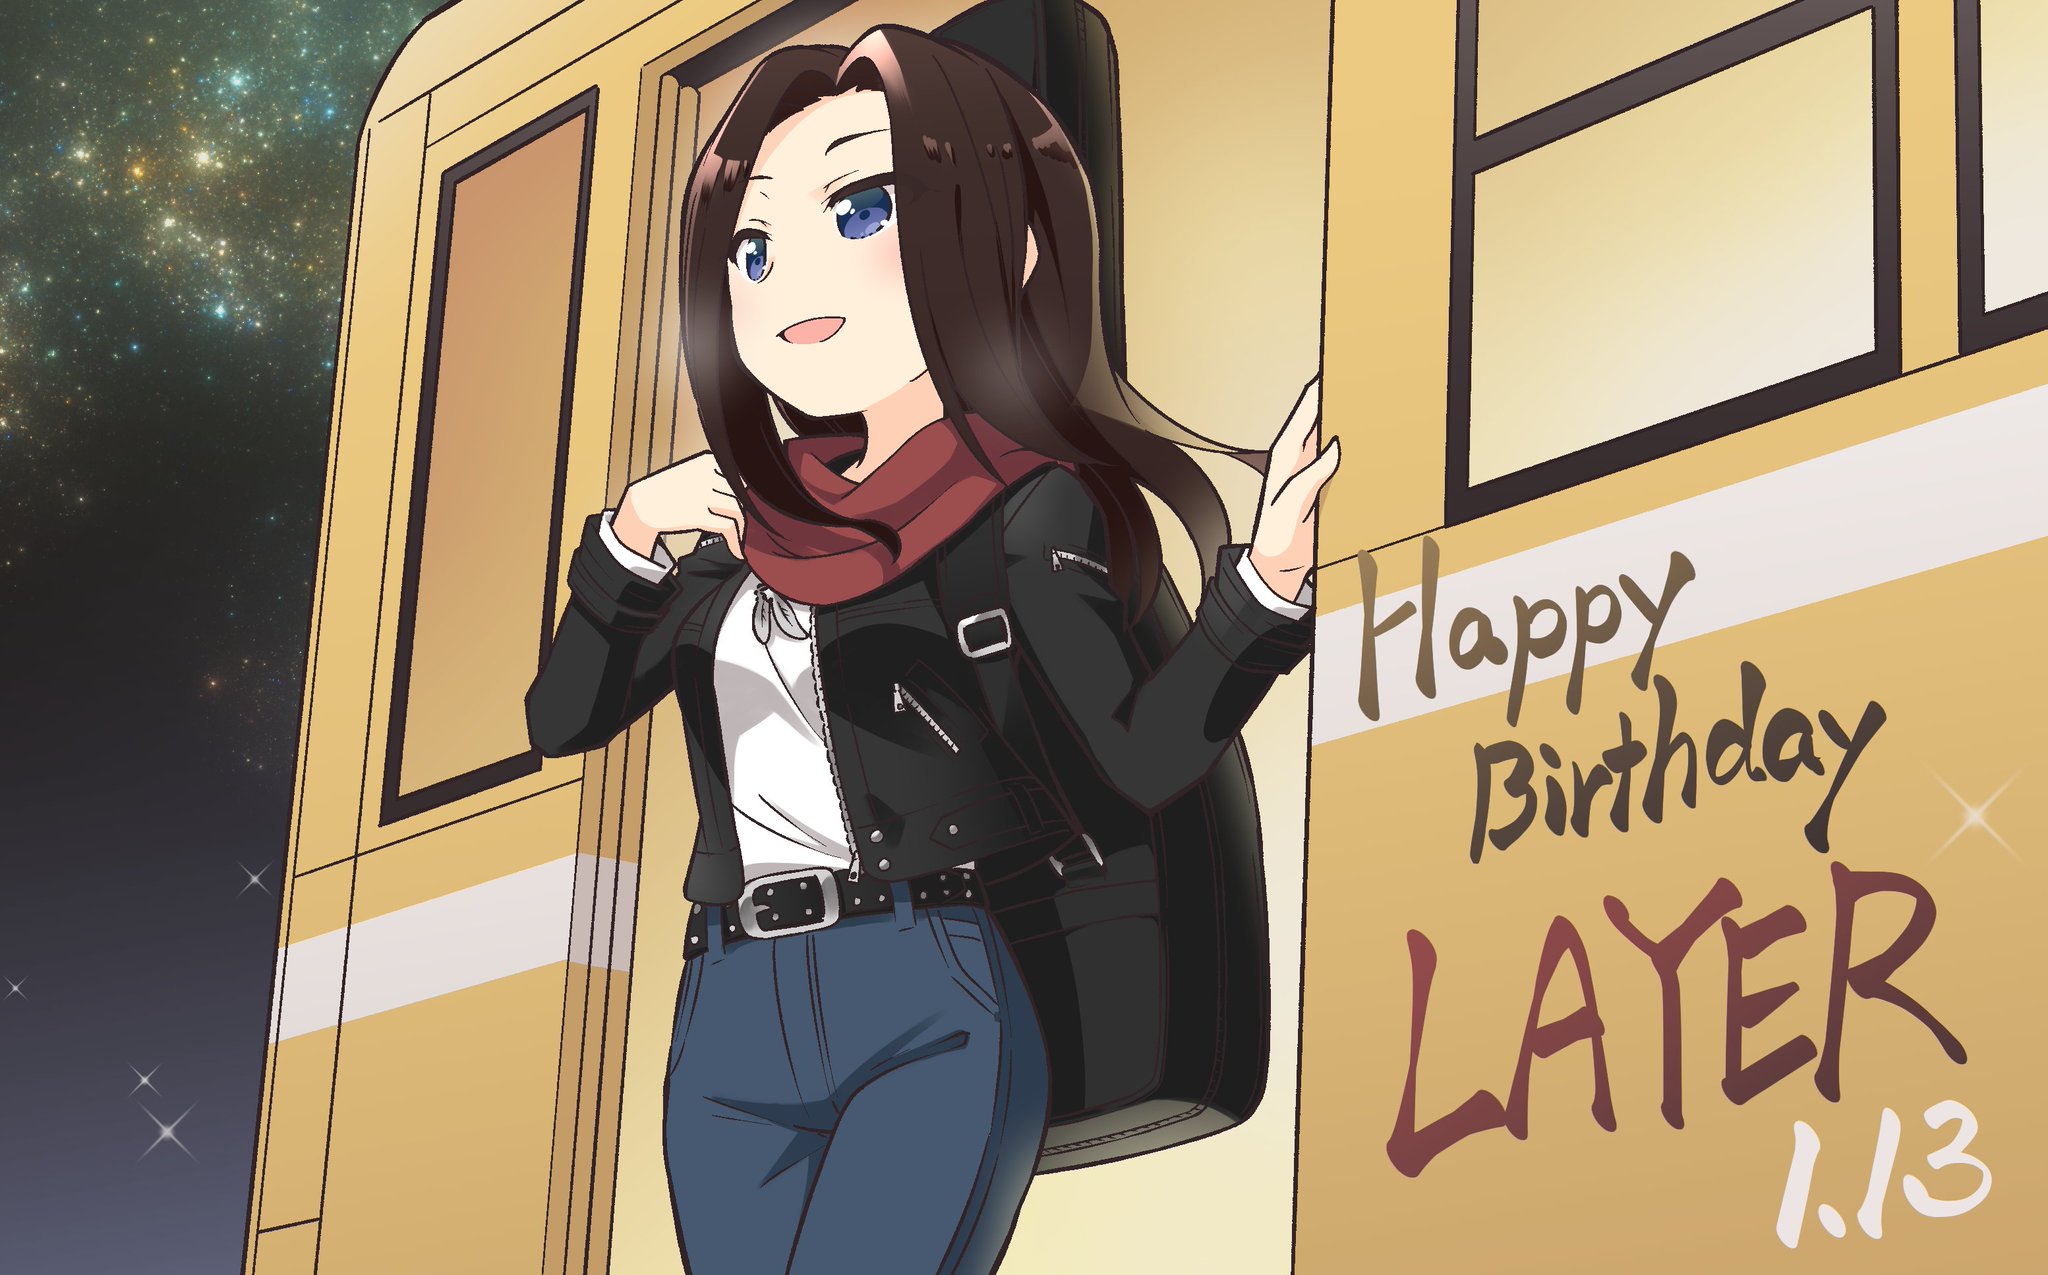 Happy Birthday Layer 2021 - LAYER